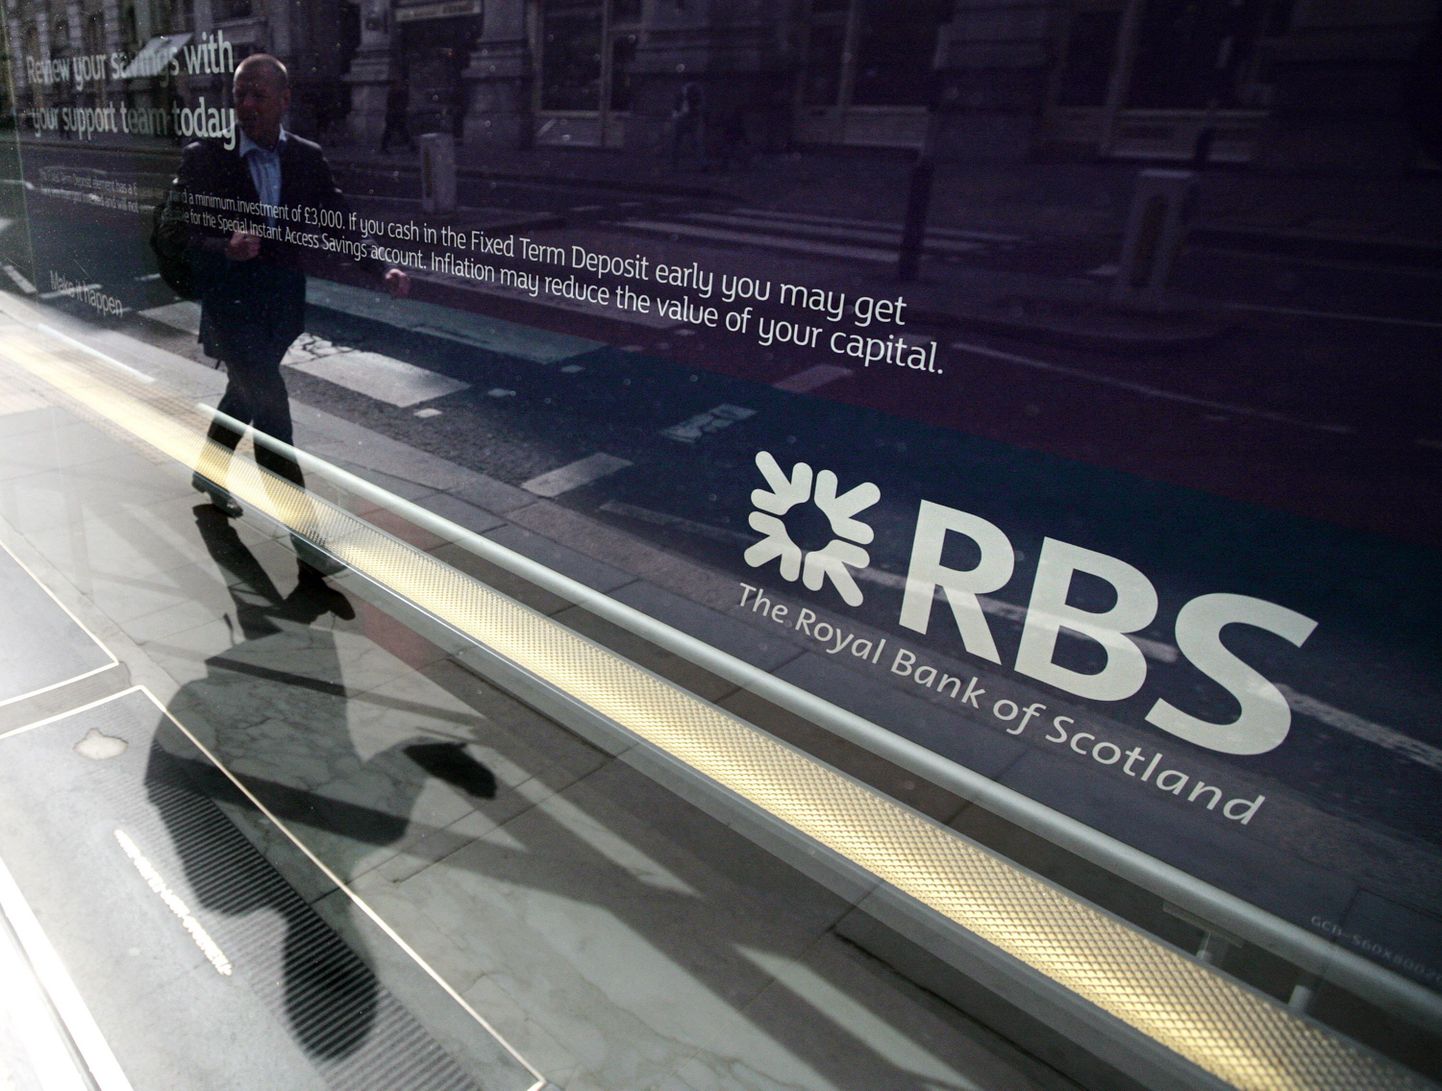 Royal Bank of Scotlandi logo Londonis asuval kontoril.